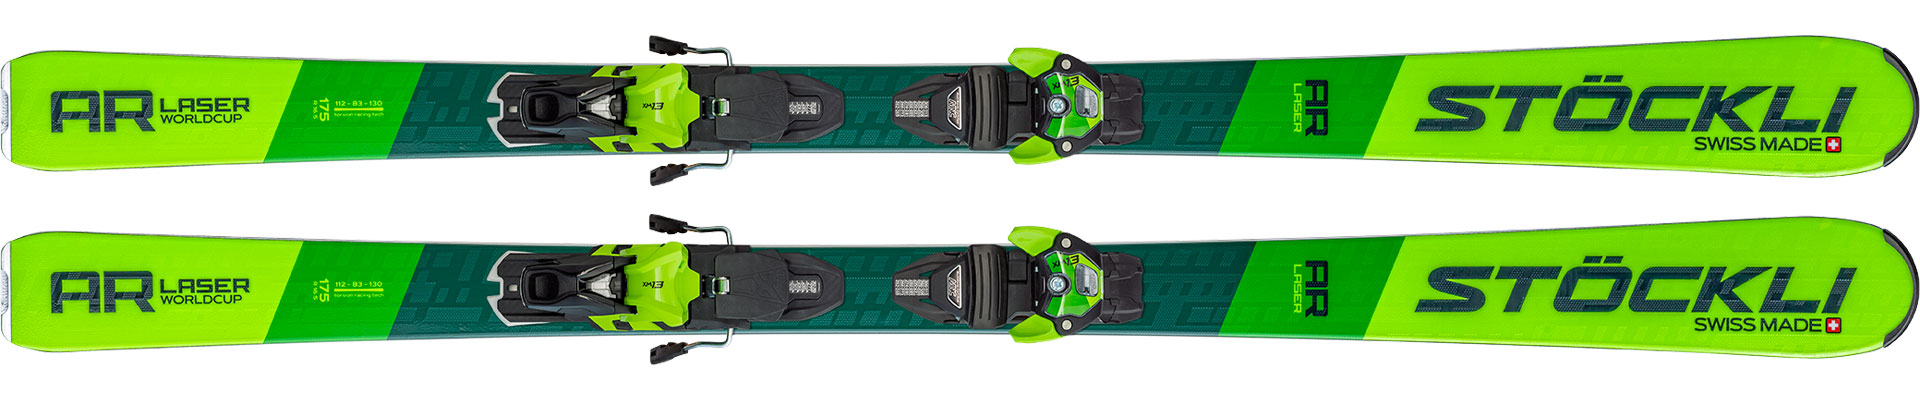 stockli skis